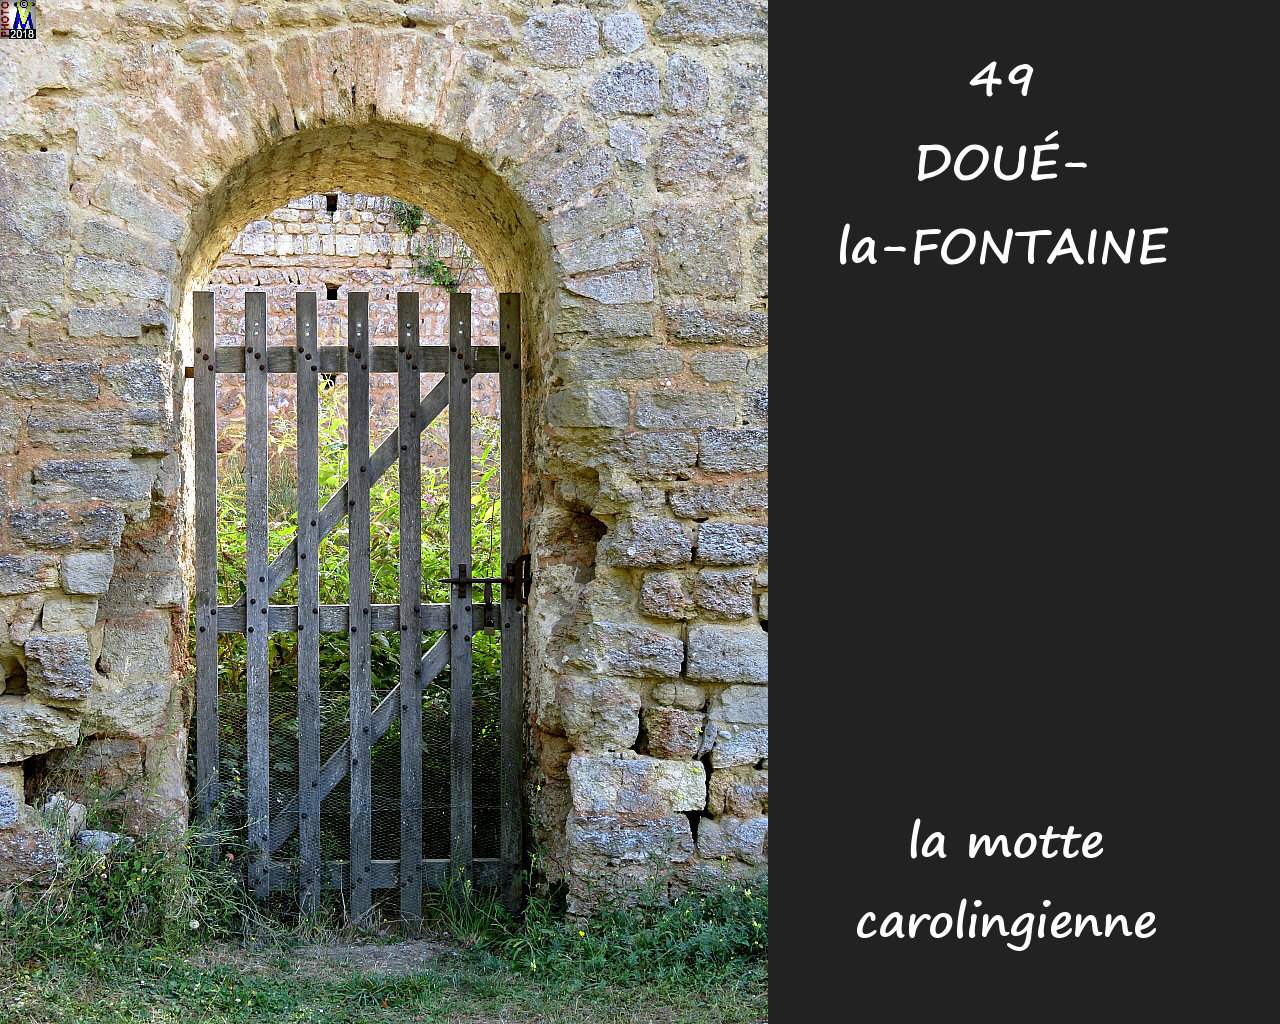 49DOUE-FONTAINE_motte_1012.jpg